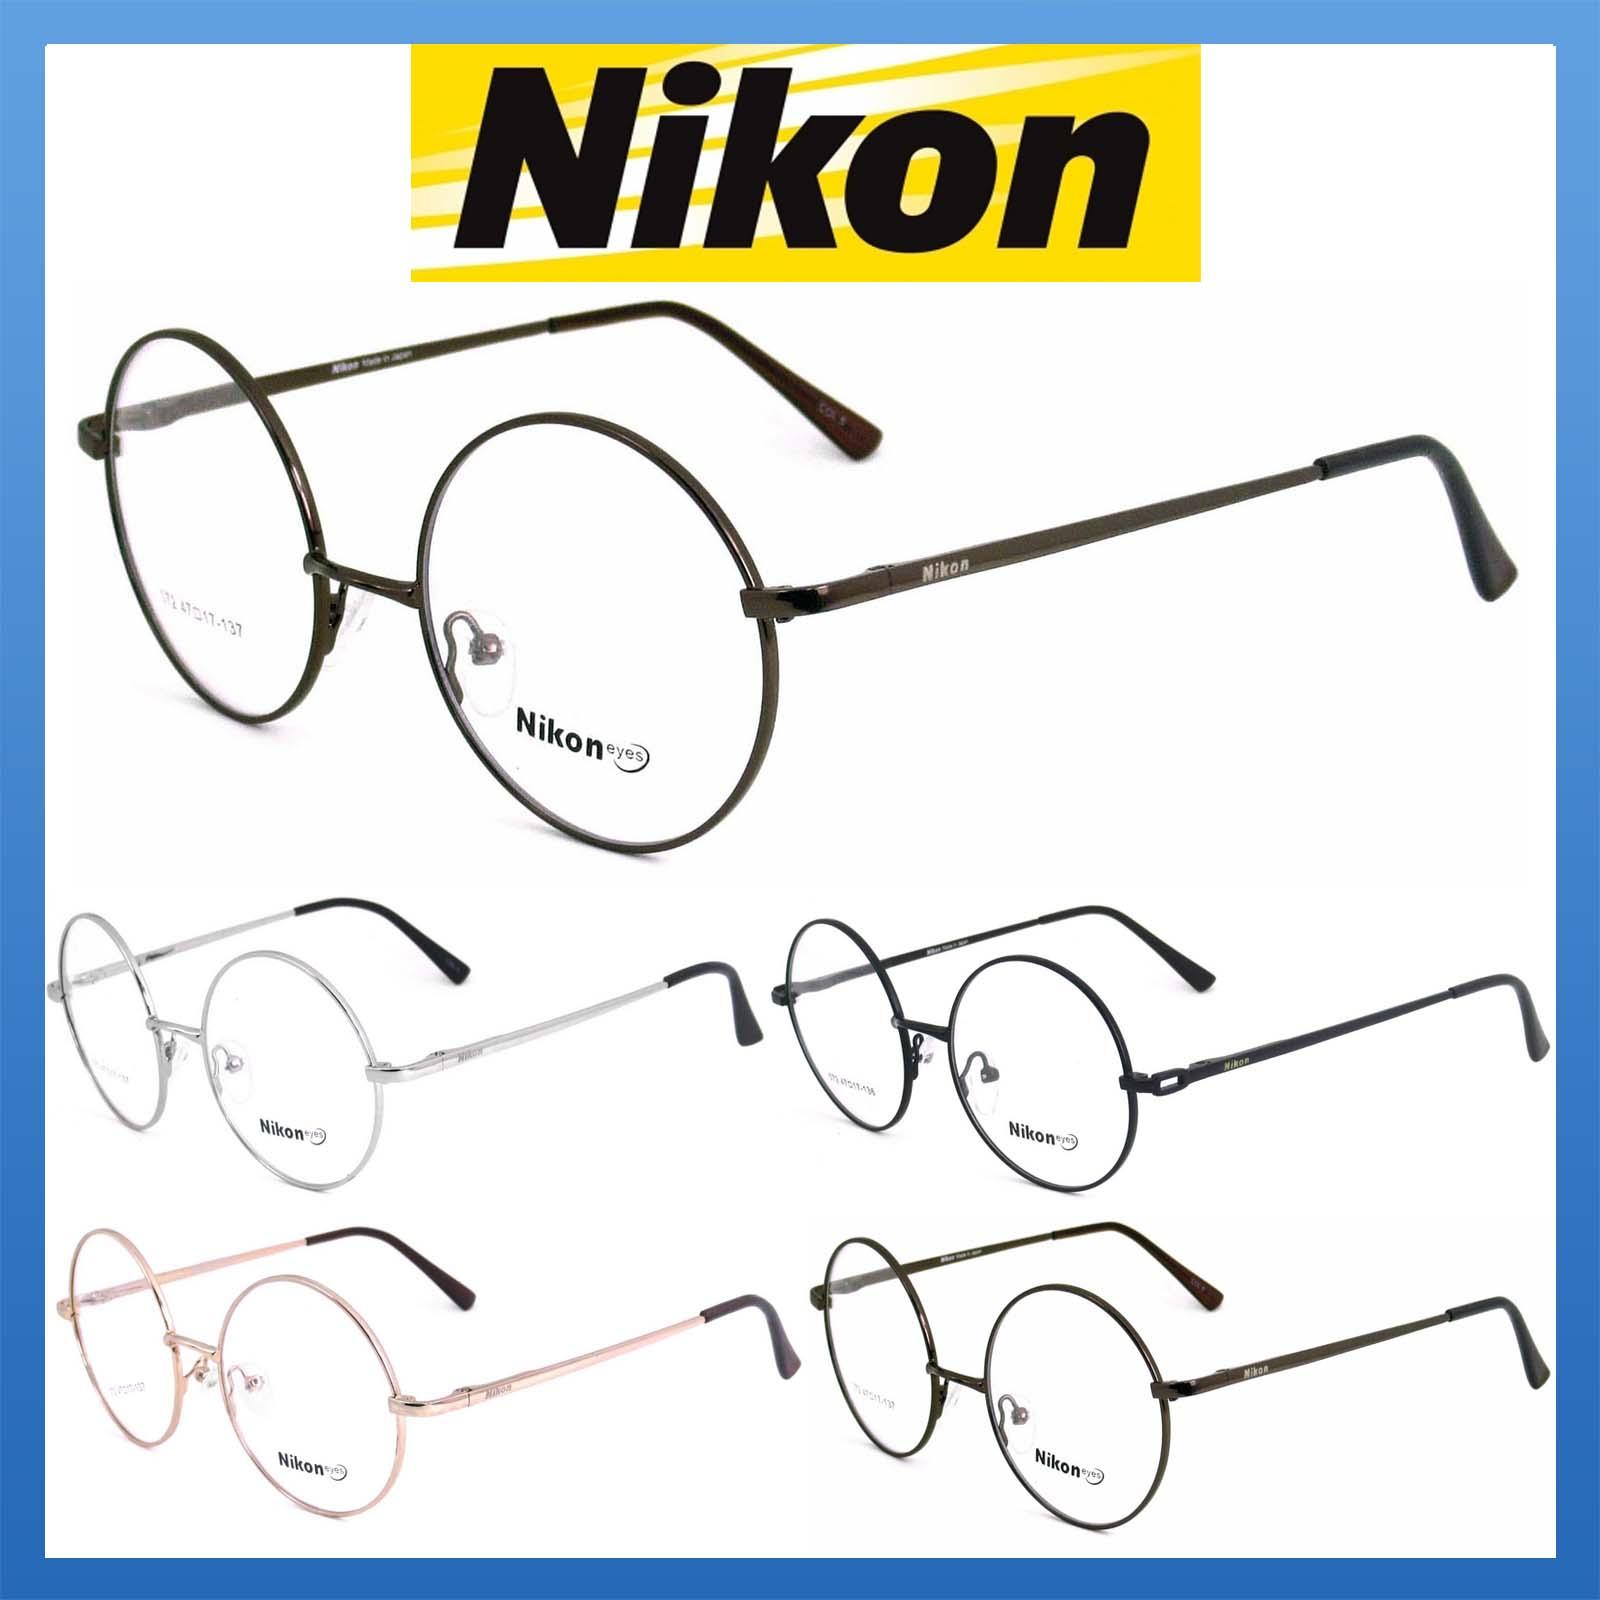 Nikon แว่นตารุ่น 072 กรอบเต็ม Round ทรงกลม ขาสปริง วัสดุ สแตนเลส สตีล (สำหรับตัดเลนส์) สวมใส่สบาย น้ำหนักเบา มีความแข็งแรงทนทาน Full frame Eyeglass Spring leg Stainless Steel material Eyewear Top Glasses ทางร้านเรามีบริการรับตัดเลนส์